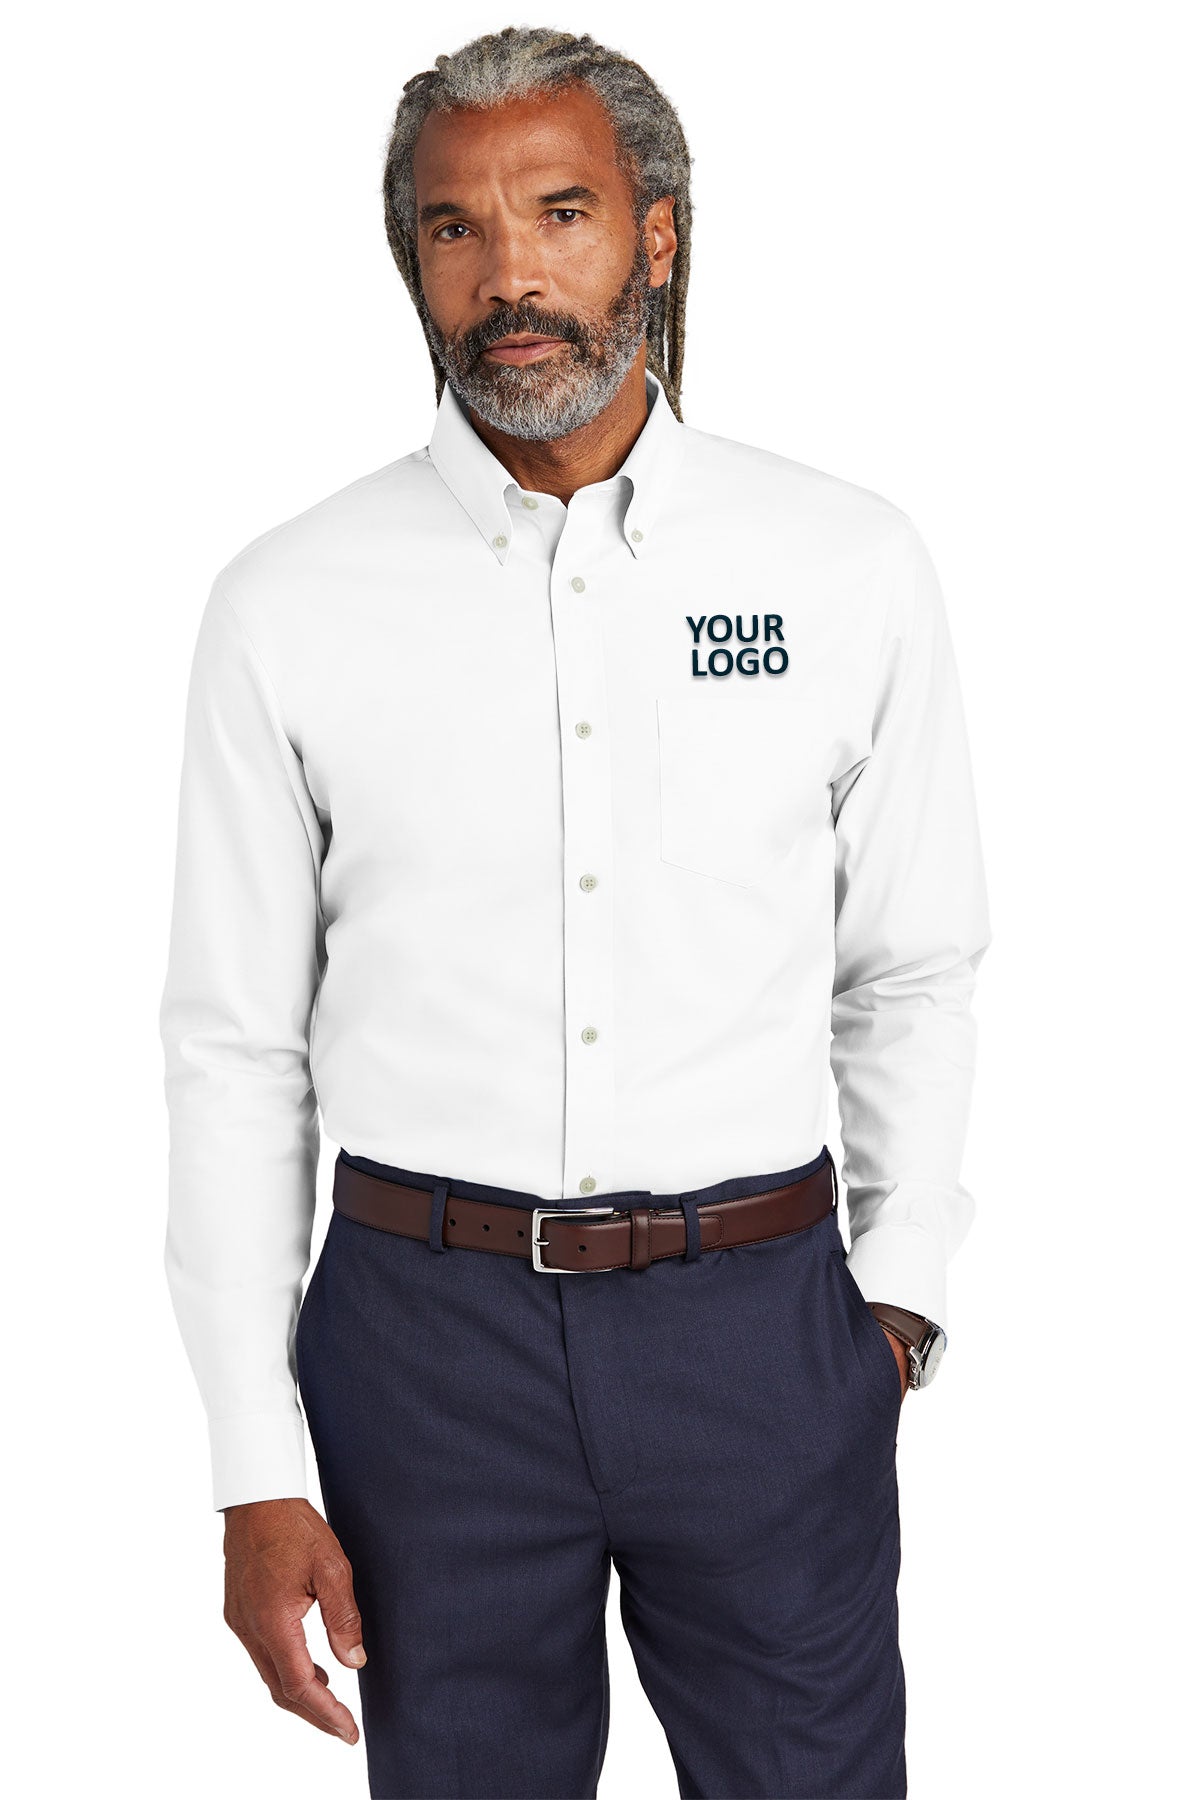 Brooks Brothers White BB18000 company logo shirts